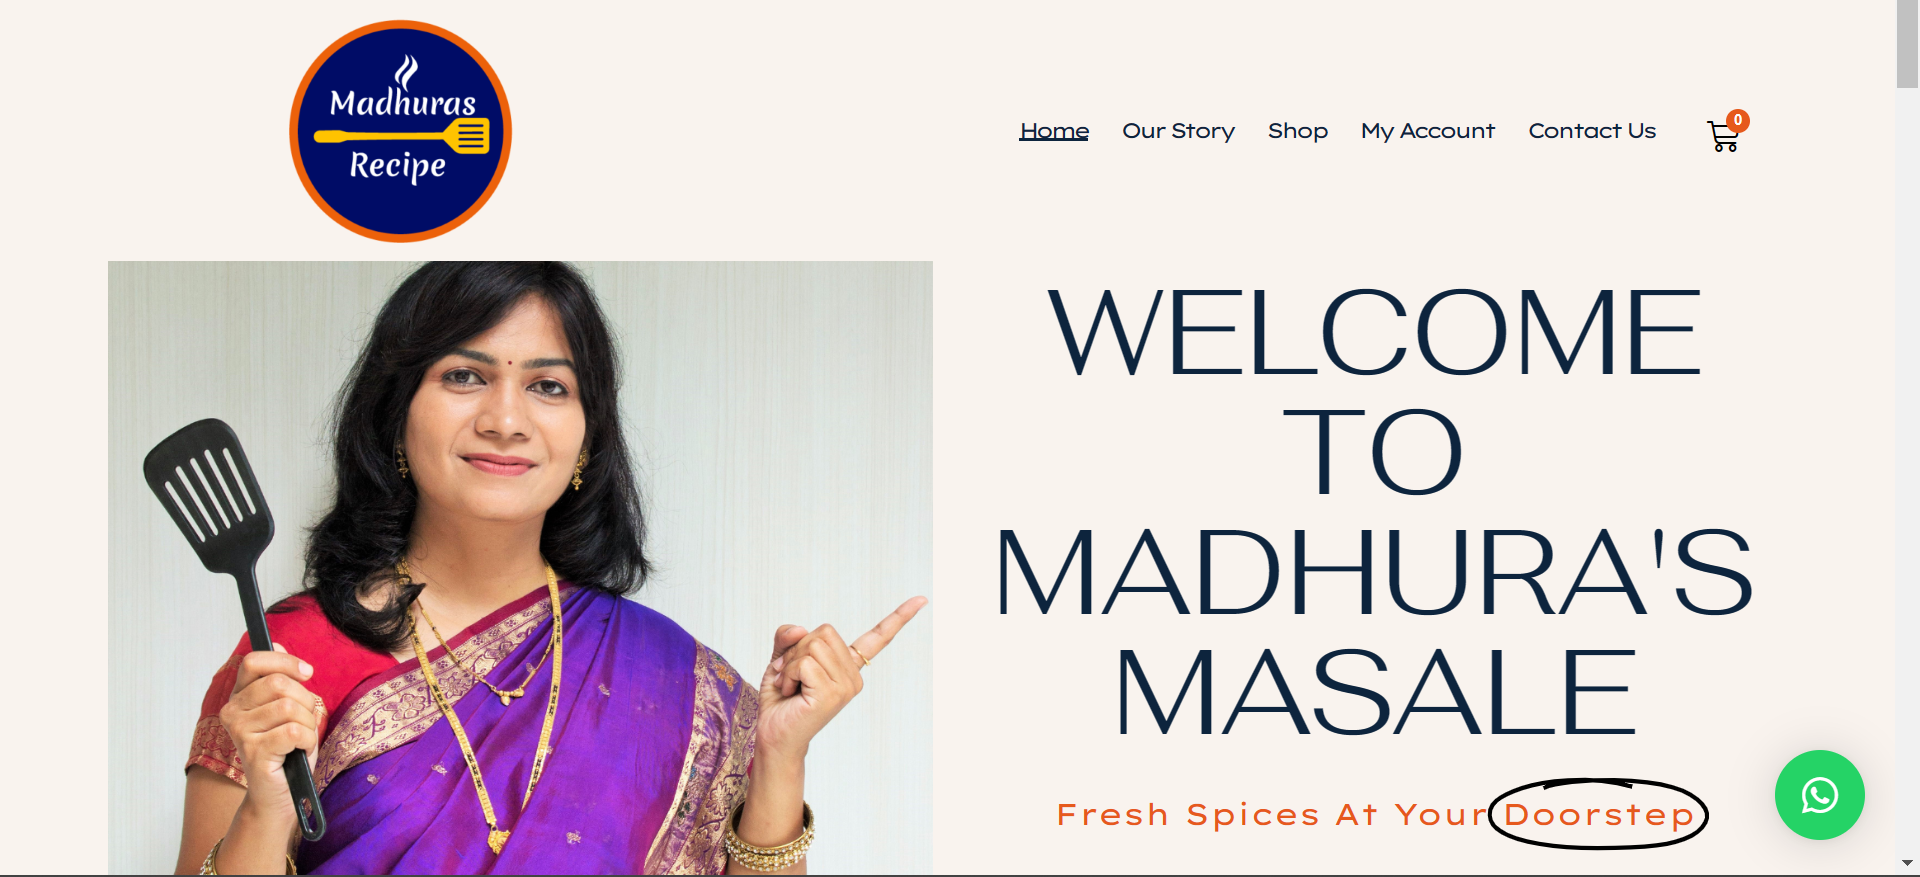 Website Development For Madhuras Recipe